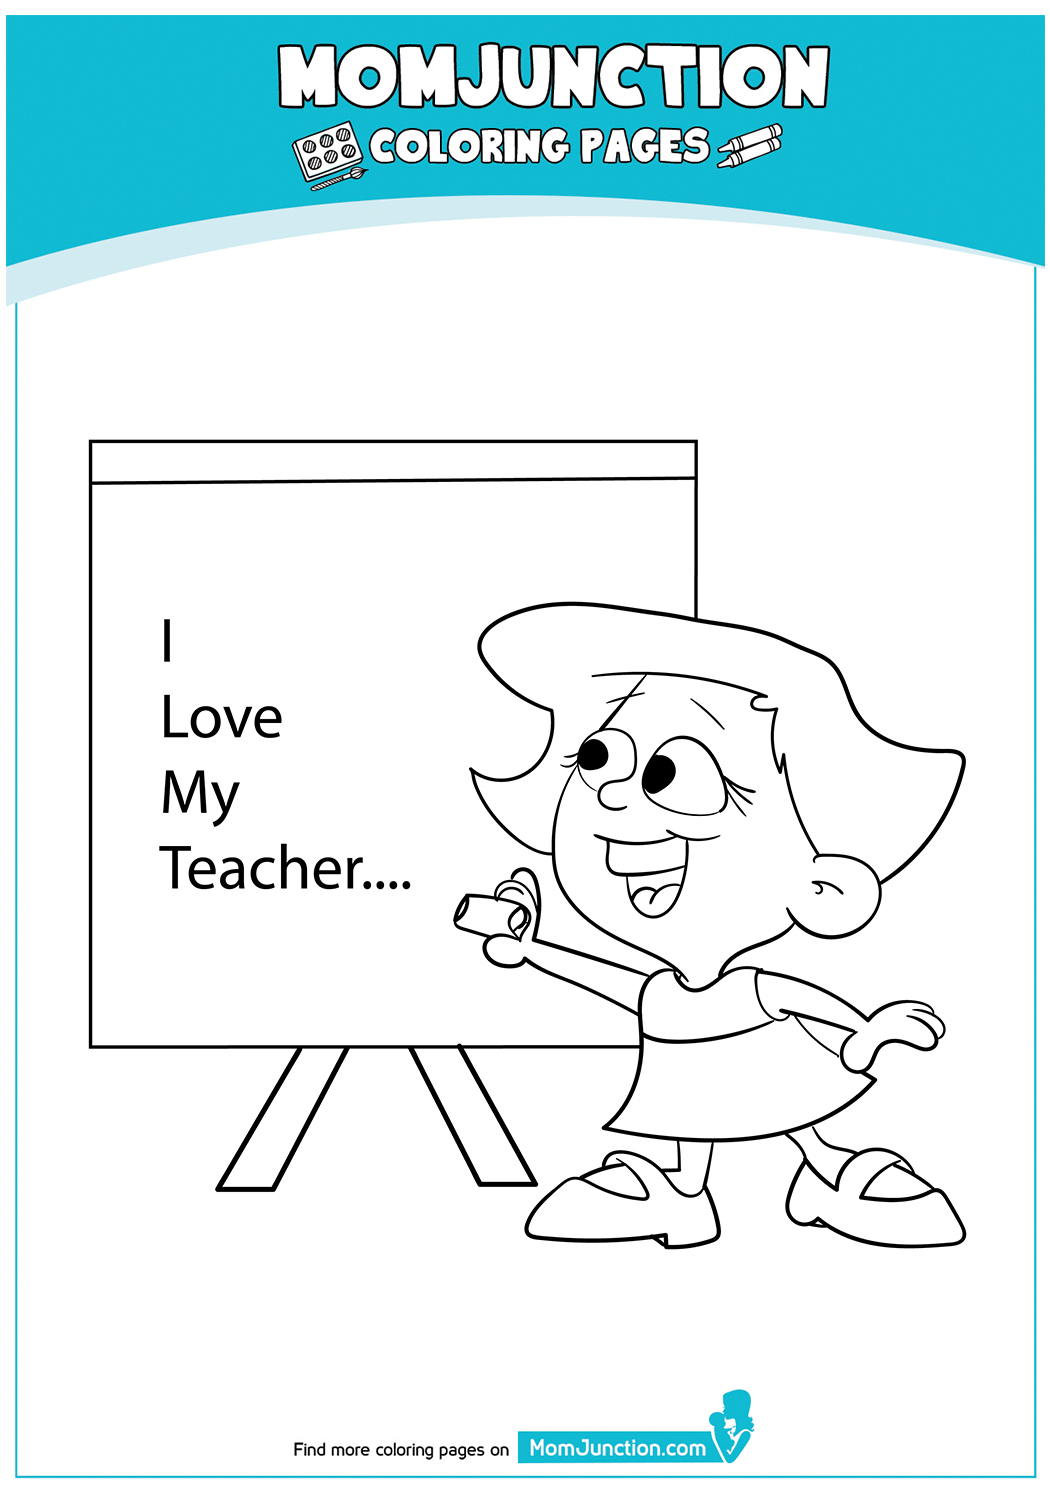 I-Love-My-Teacher-17-11